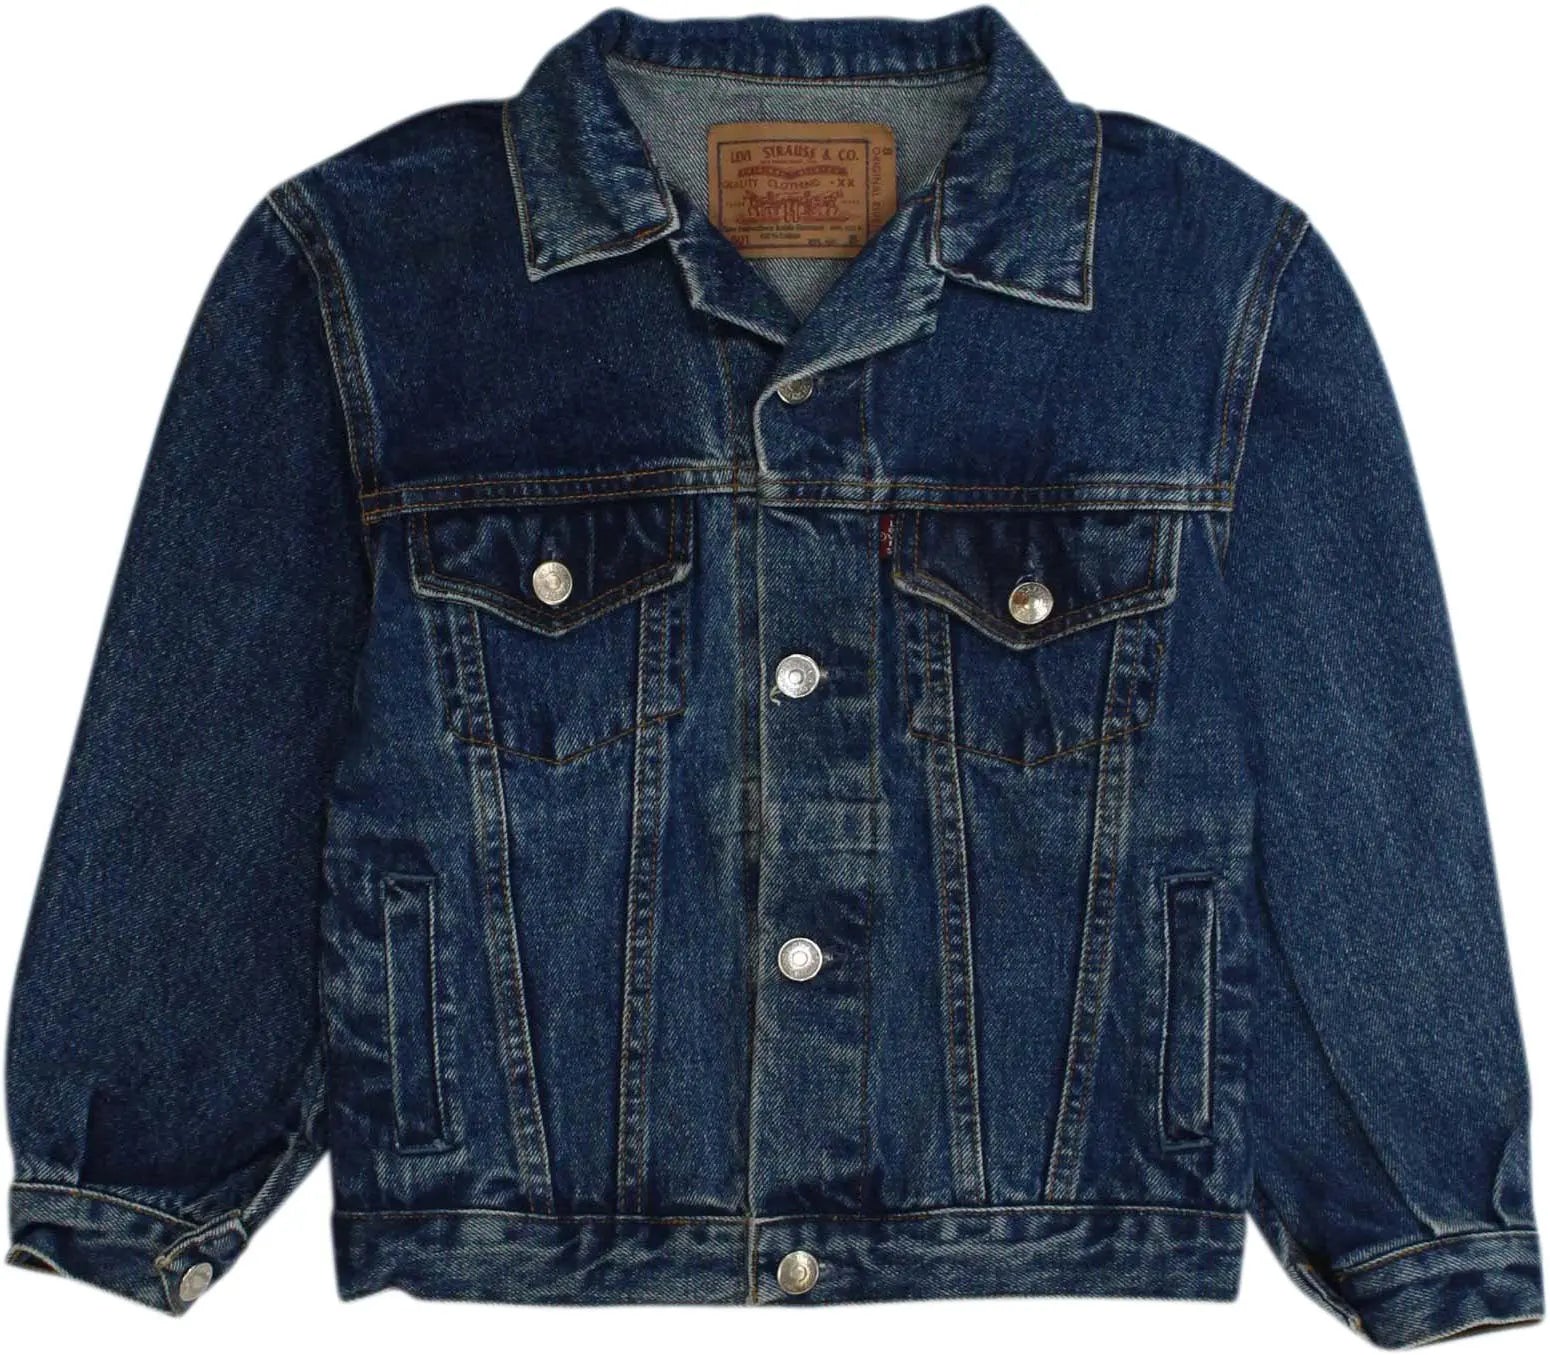 Levi's - Blue Denim Jacket by Levi's- ThriftTale.com - Vintage and second handclothing